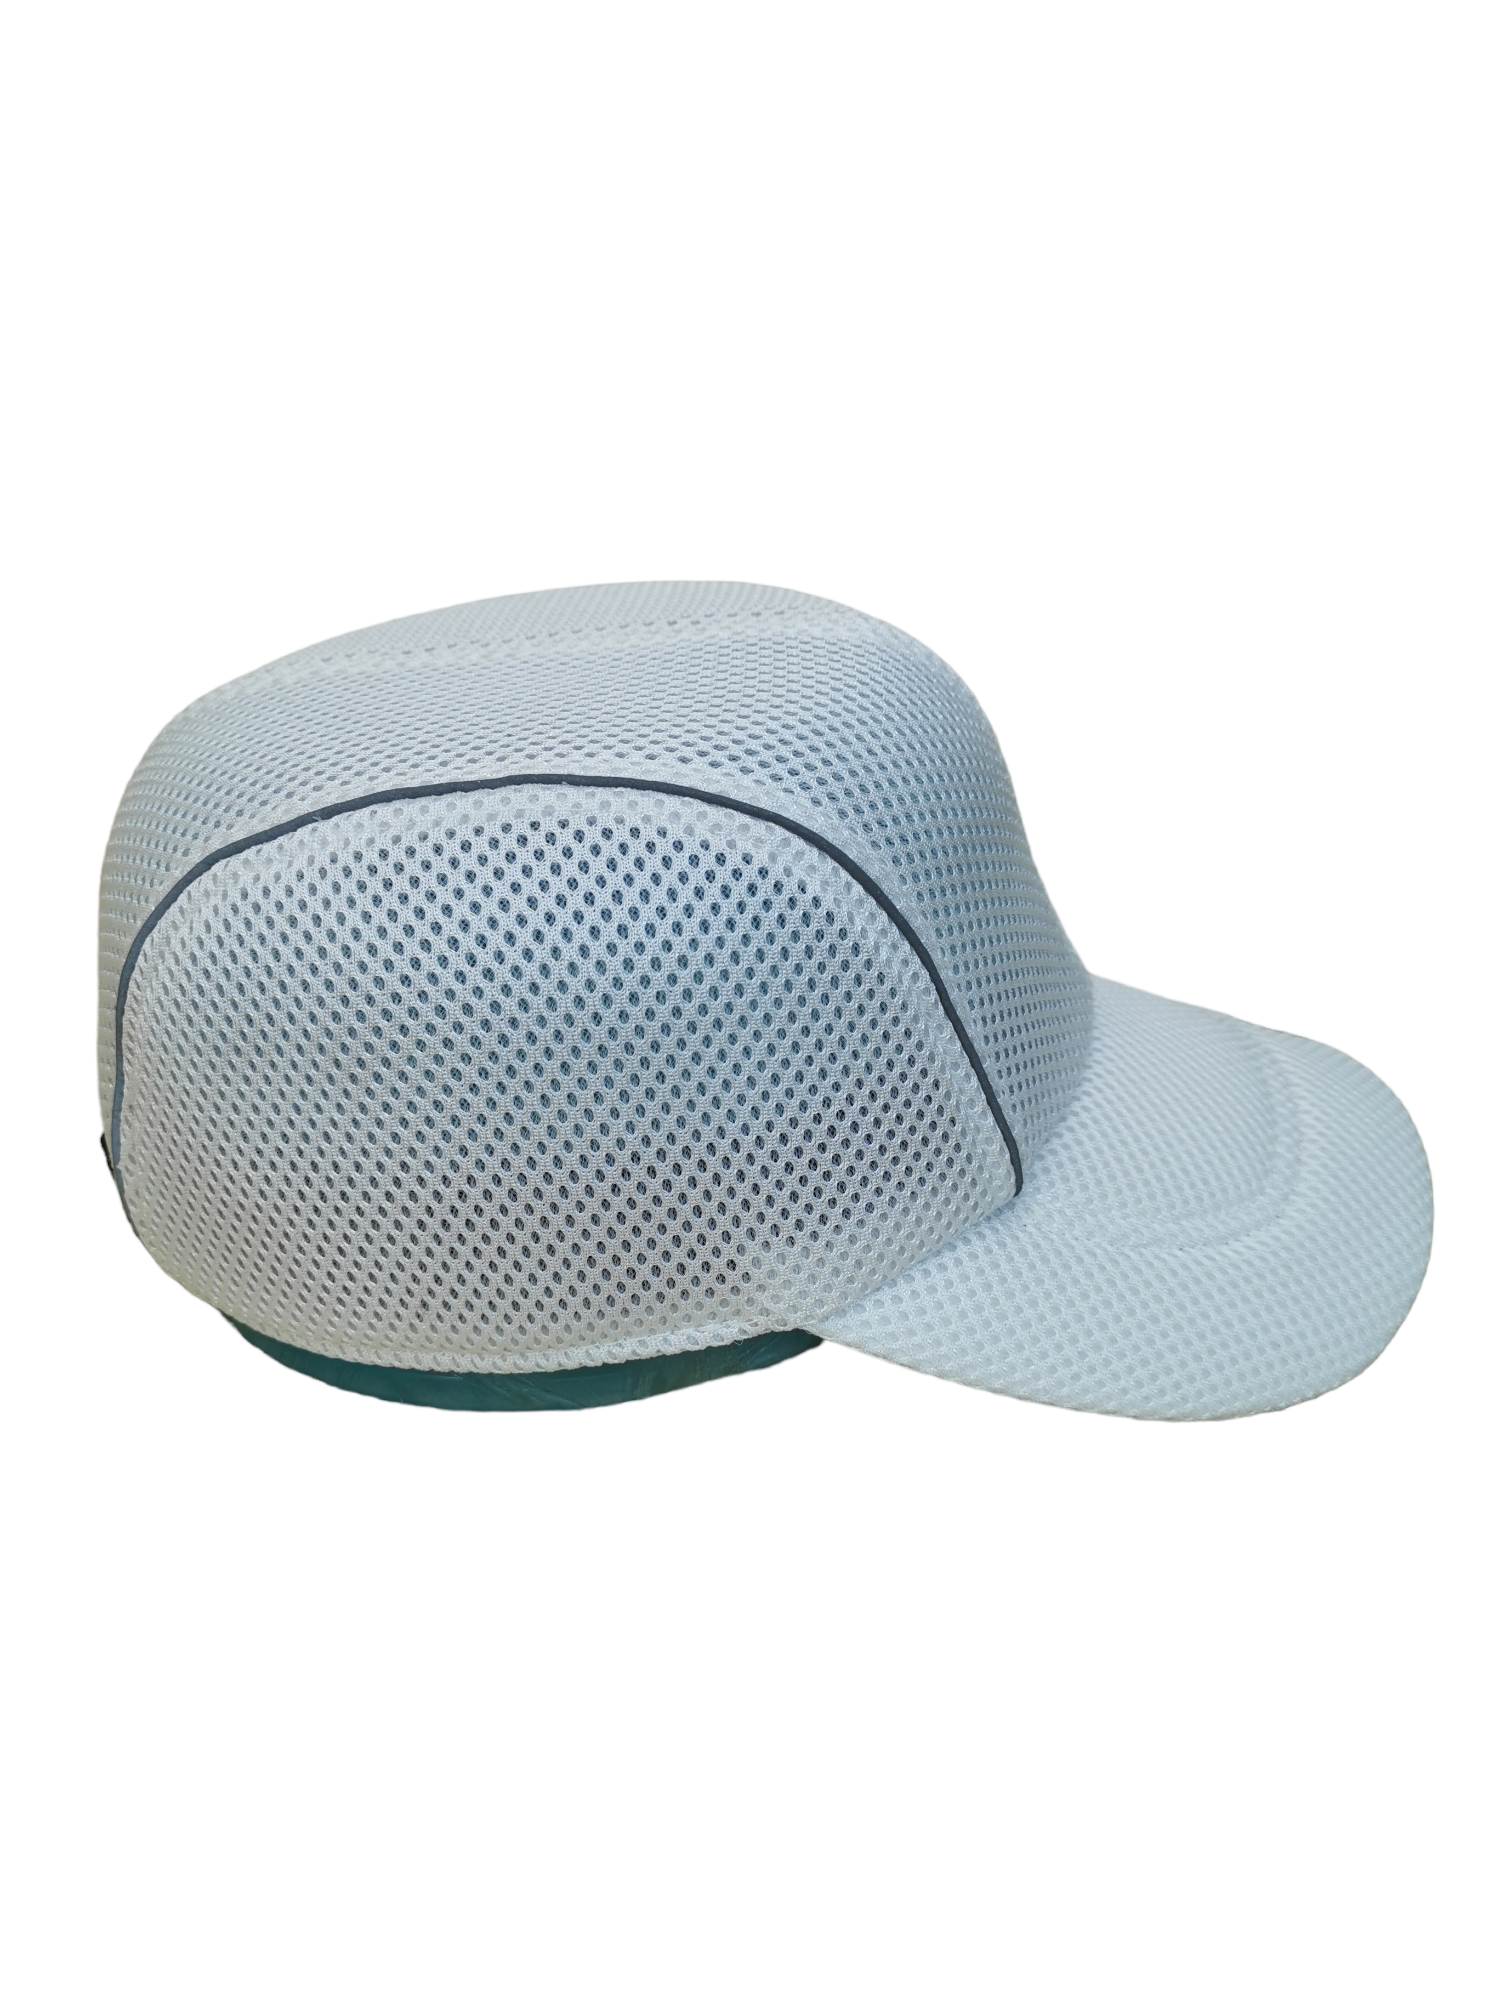 🔥FREE SHIPPING🔥 JAPANESE BRAND ASICS HAT CAP - 4